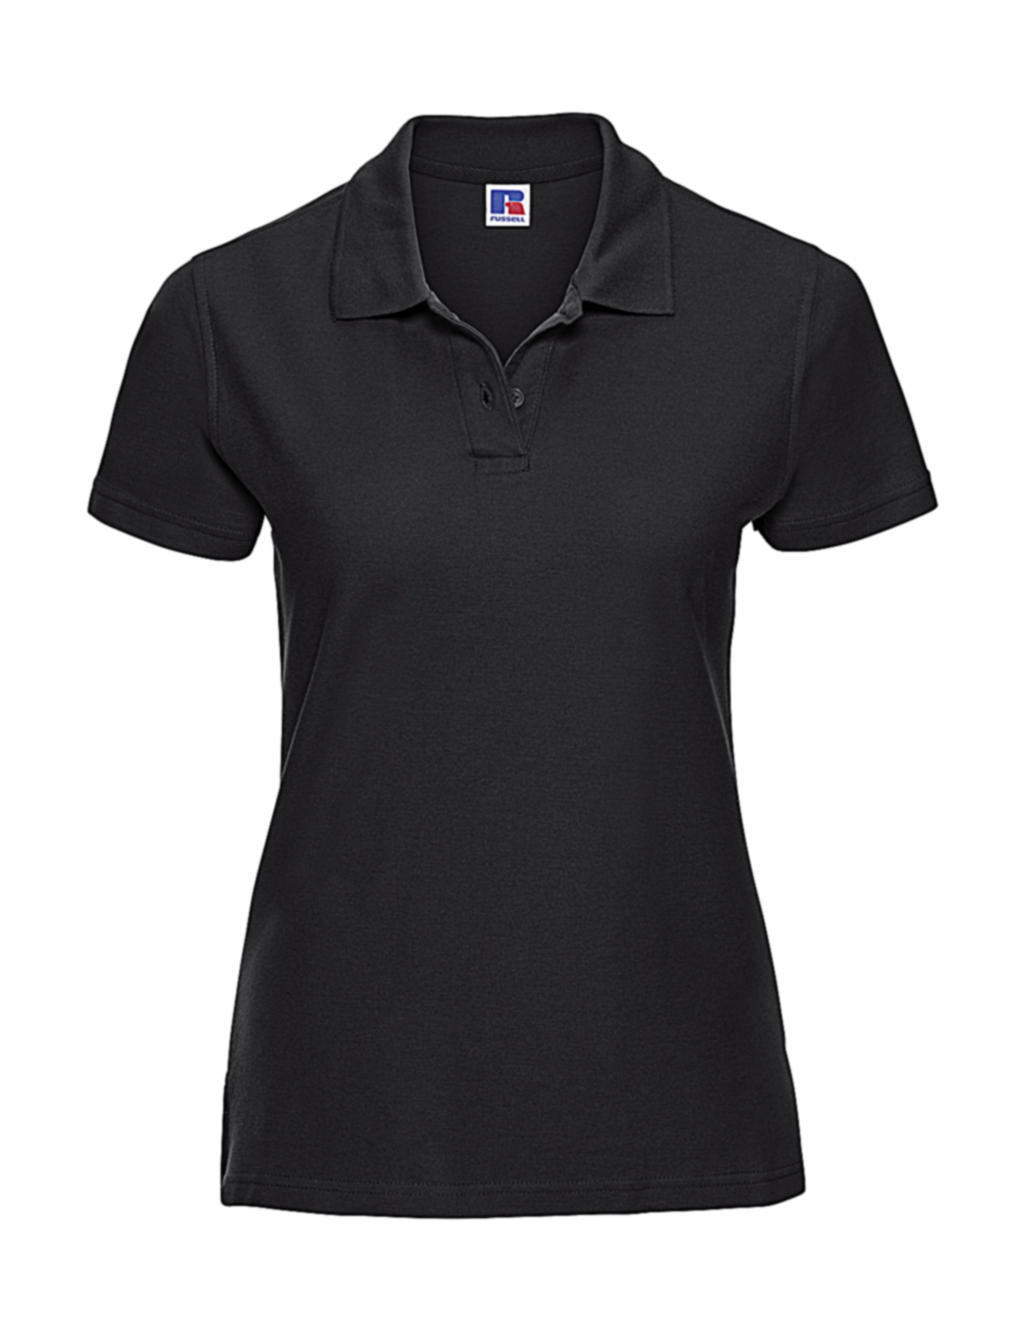  Ladies Ultimate Cotton Polo in Farbe Black